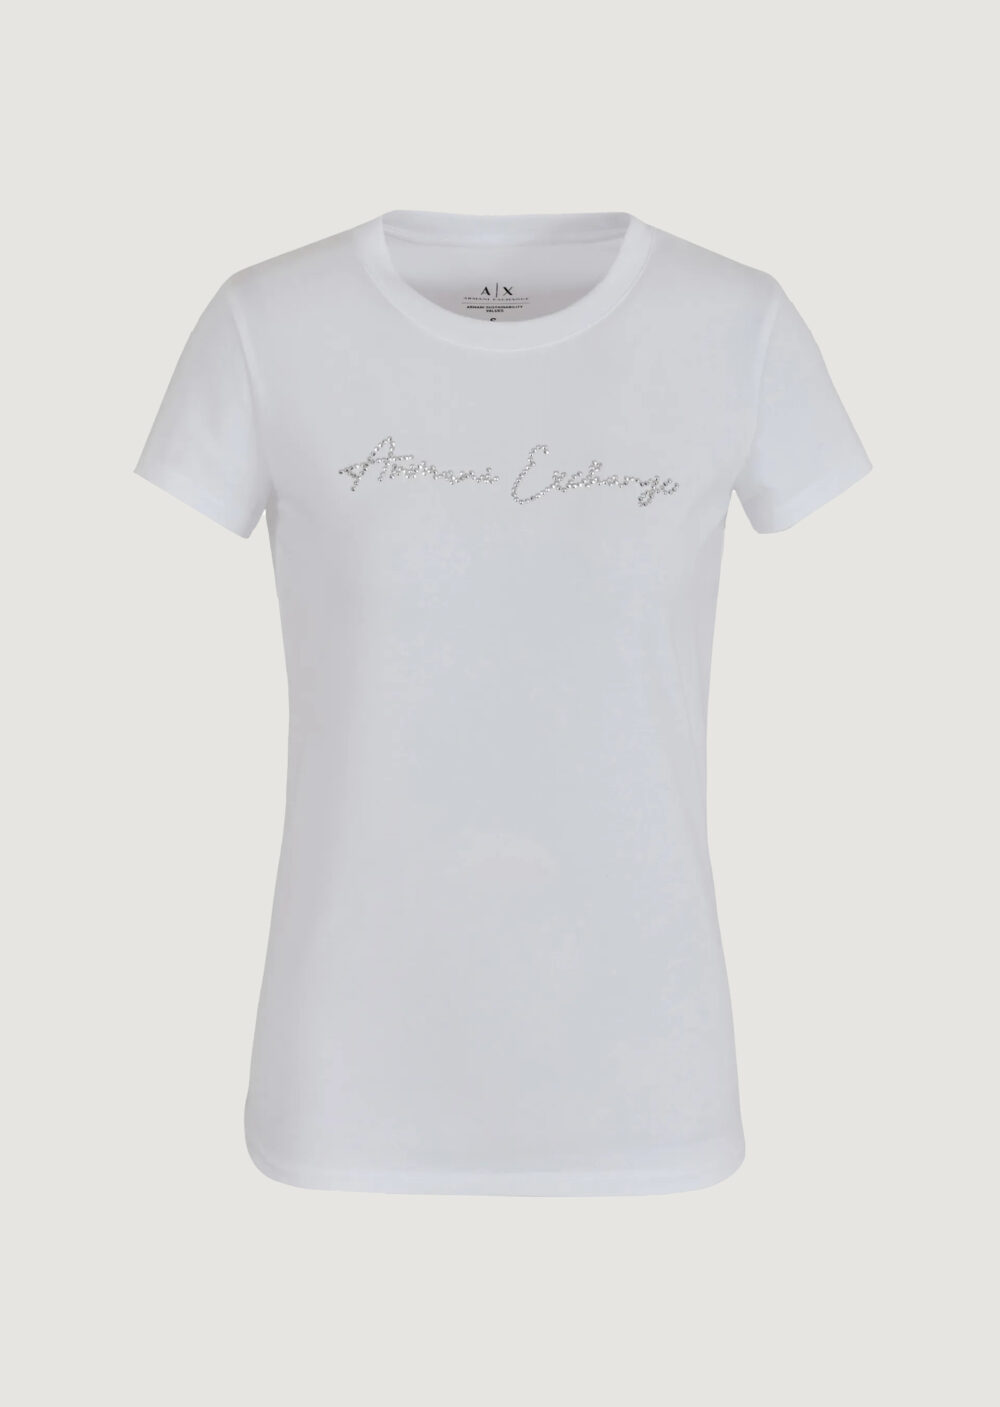 T-shirt Armani Exchange  Bianco - Foto 5